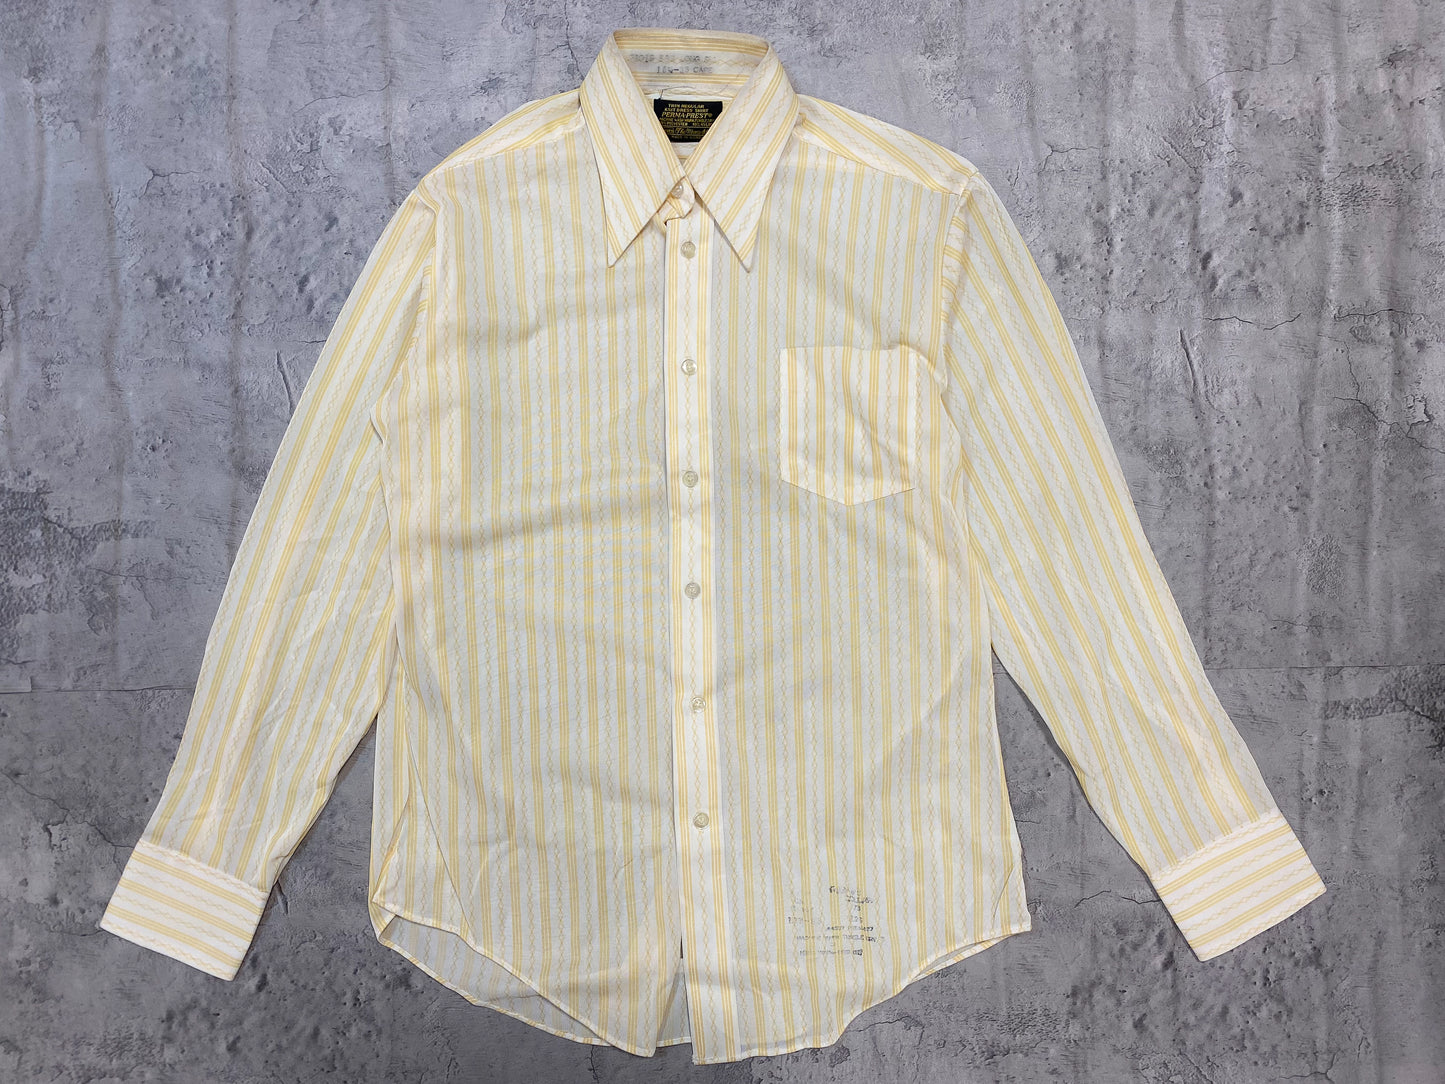 Sears Stripe Shirt vintage 70s